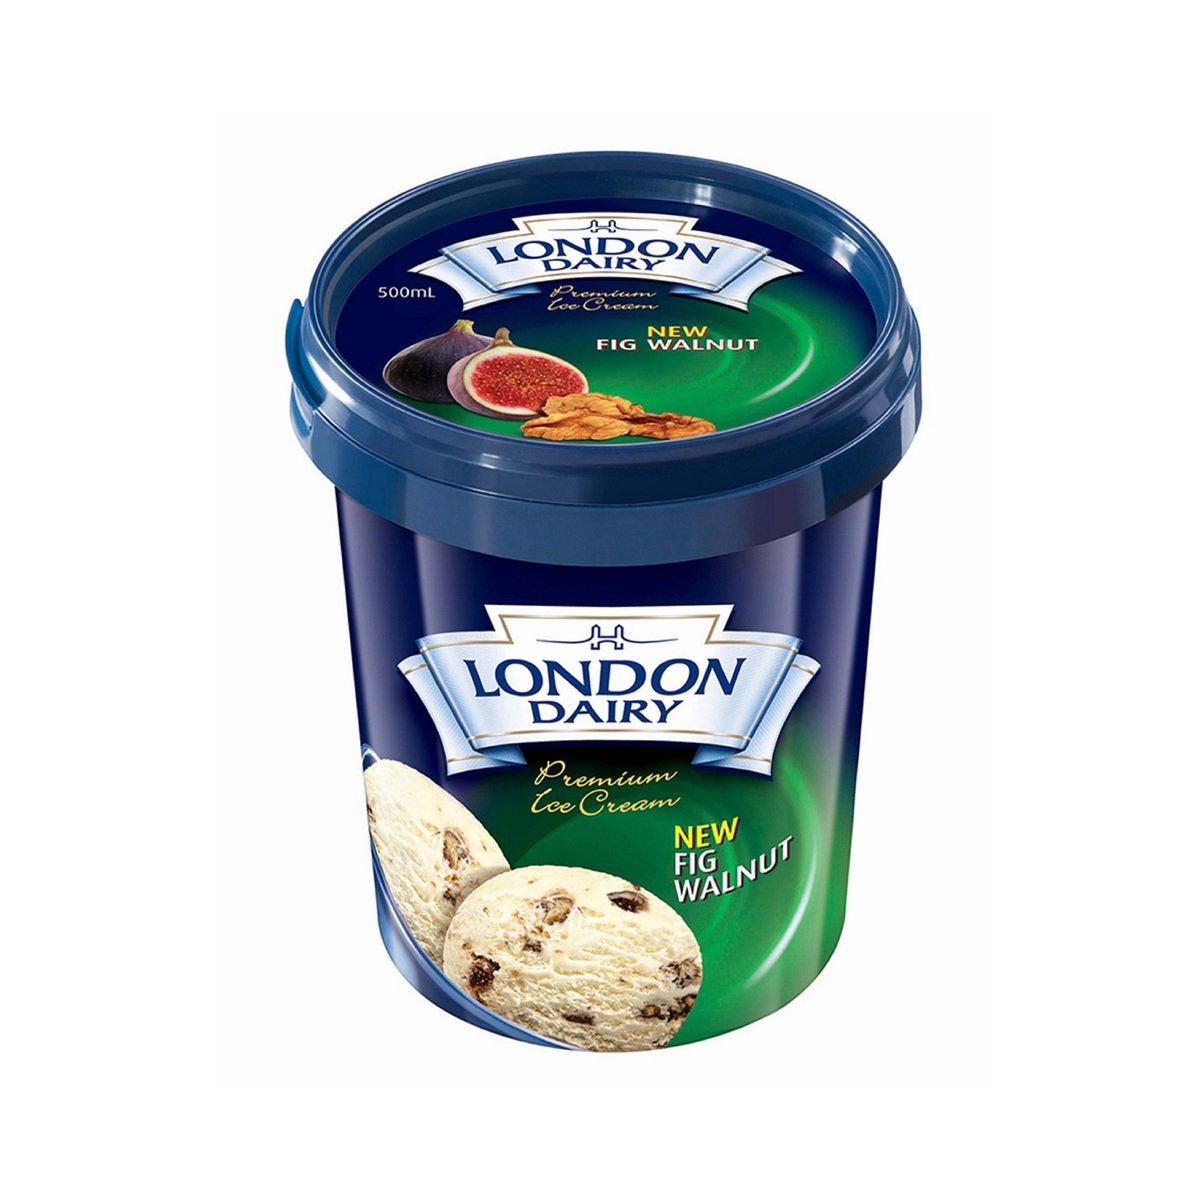 London Dairy Fig & Walnut Ice Cream 500 ml